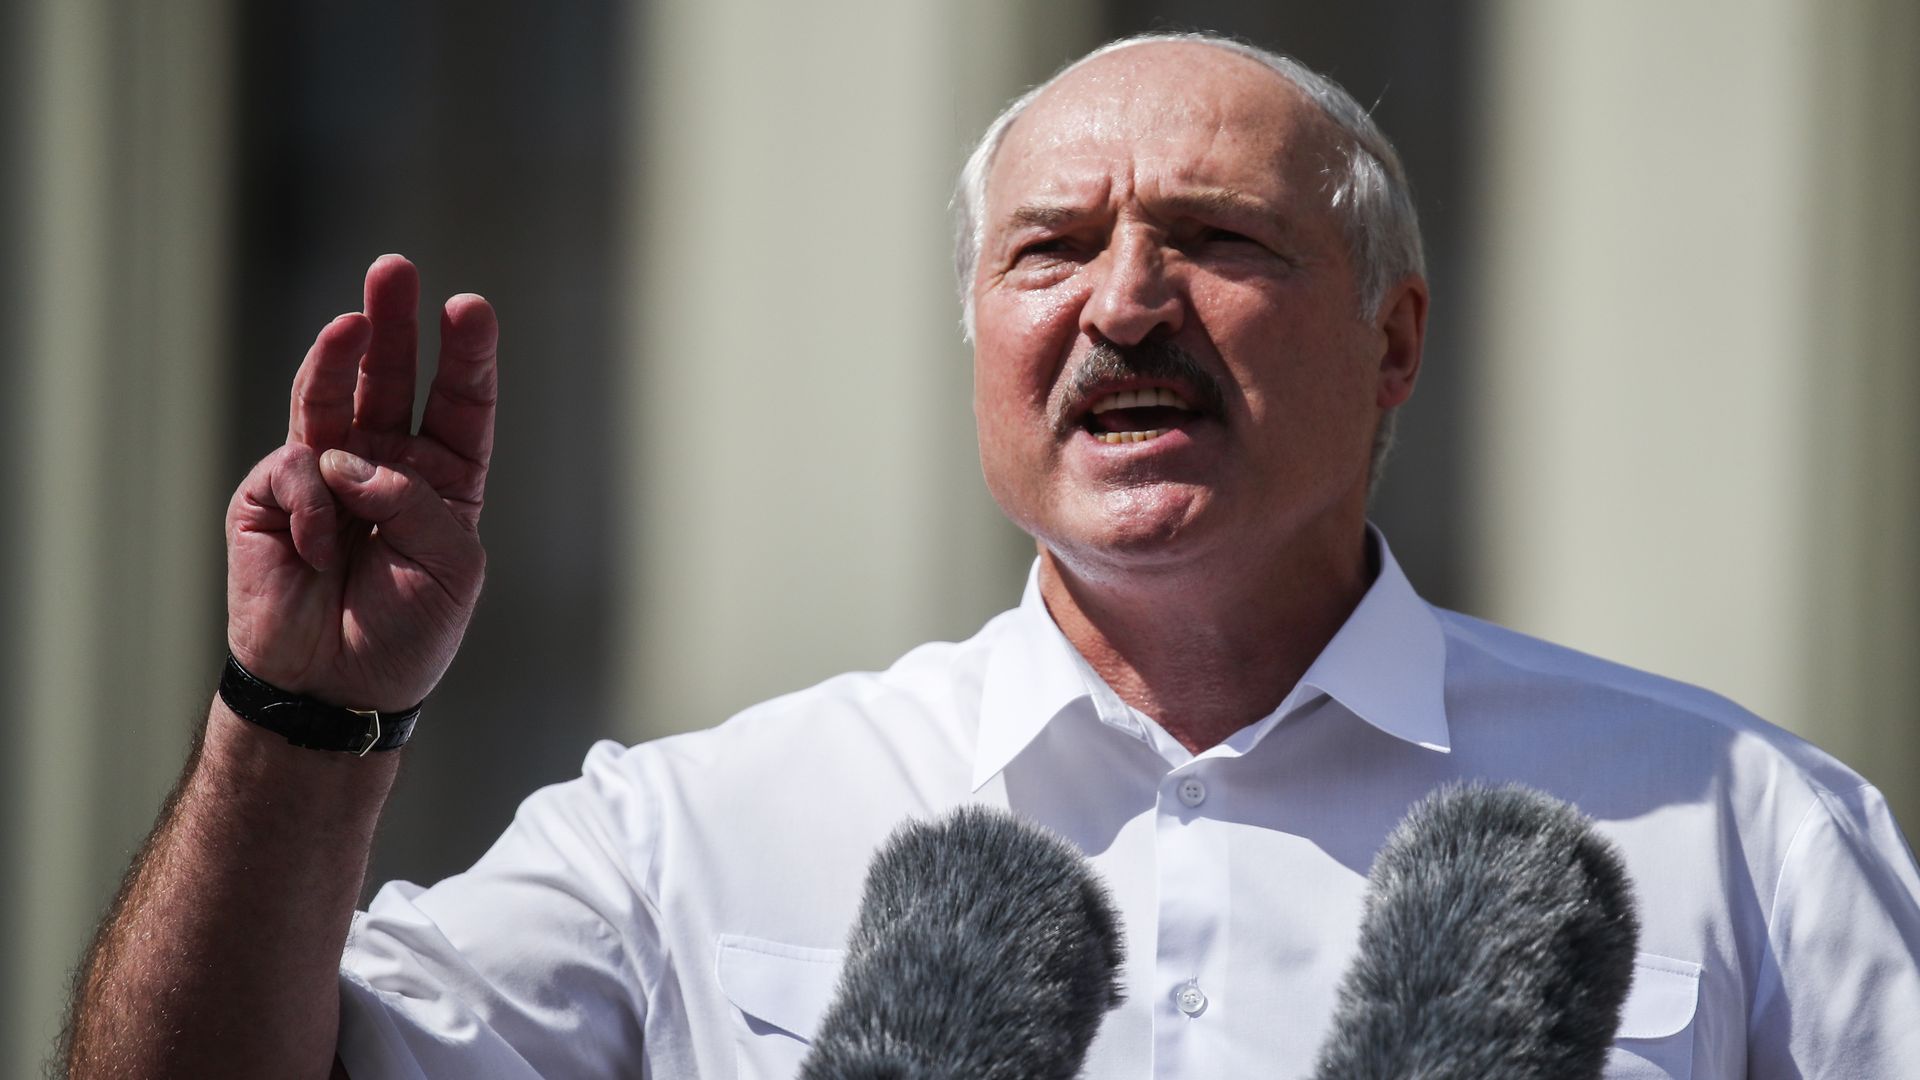 Belarus' President Alexander Lukashenko speaking in Minsk in August 2020.